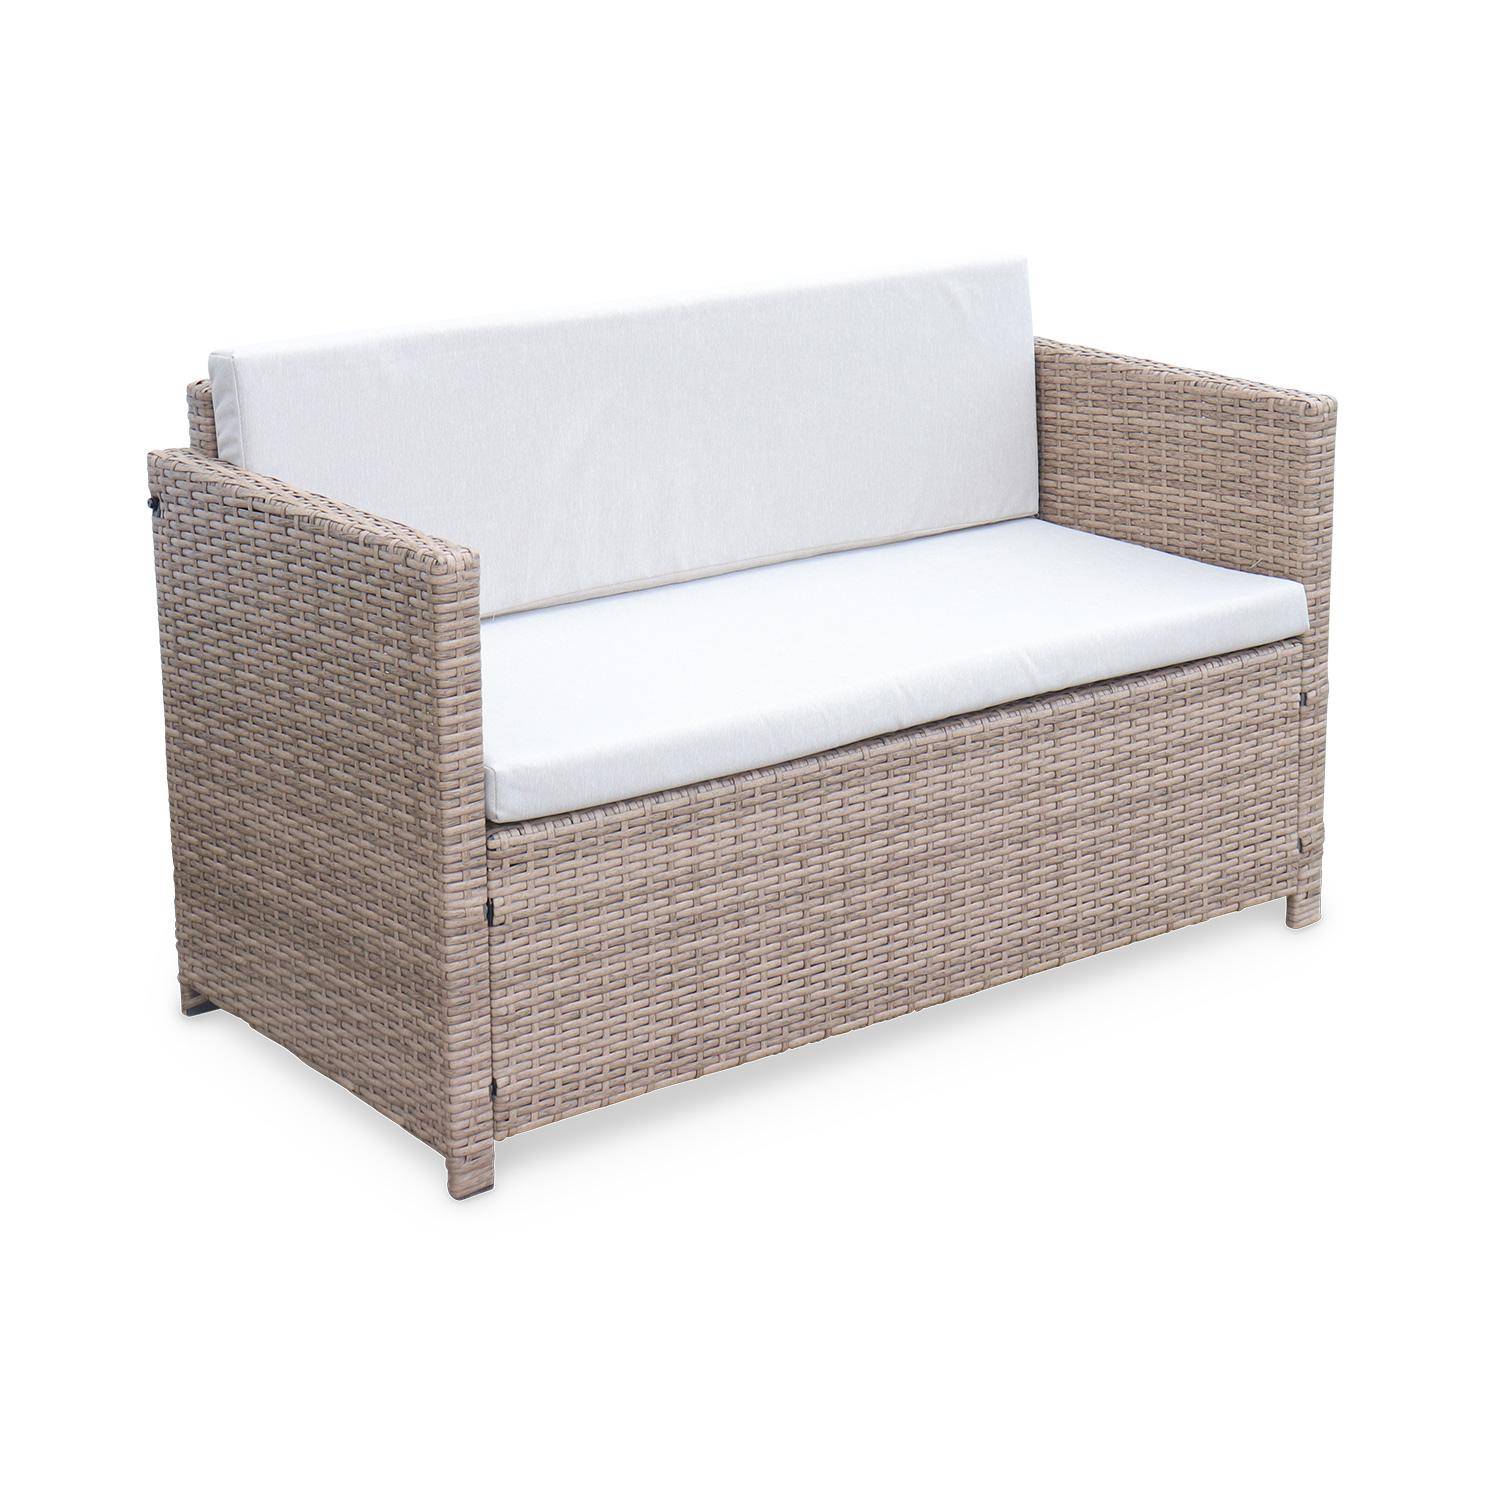 4-seater polyrattan garden sofa set - sofa, 2 armchairs, coffee table - Perugia - Natural Beige rattan, Beige cushions,sweeek,Photo5